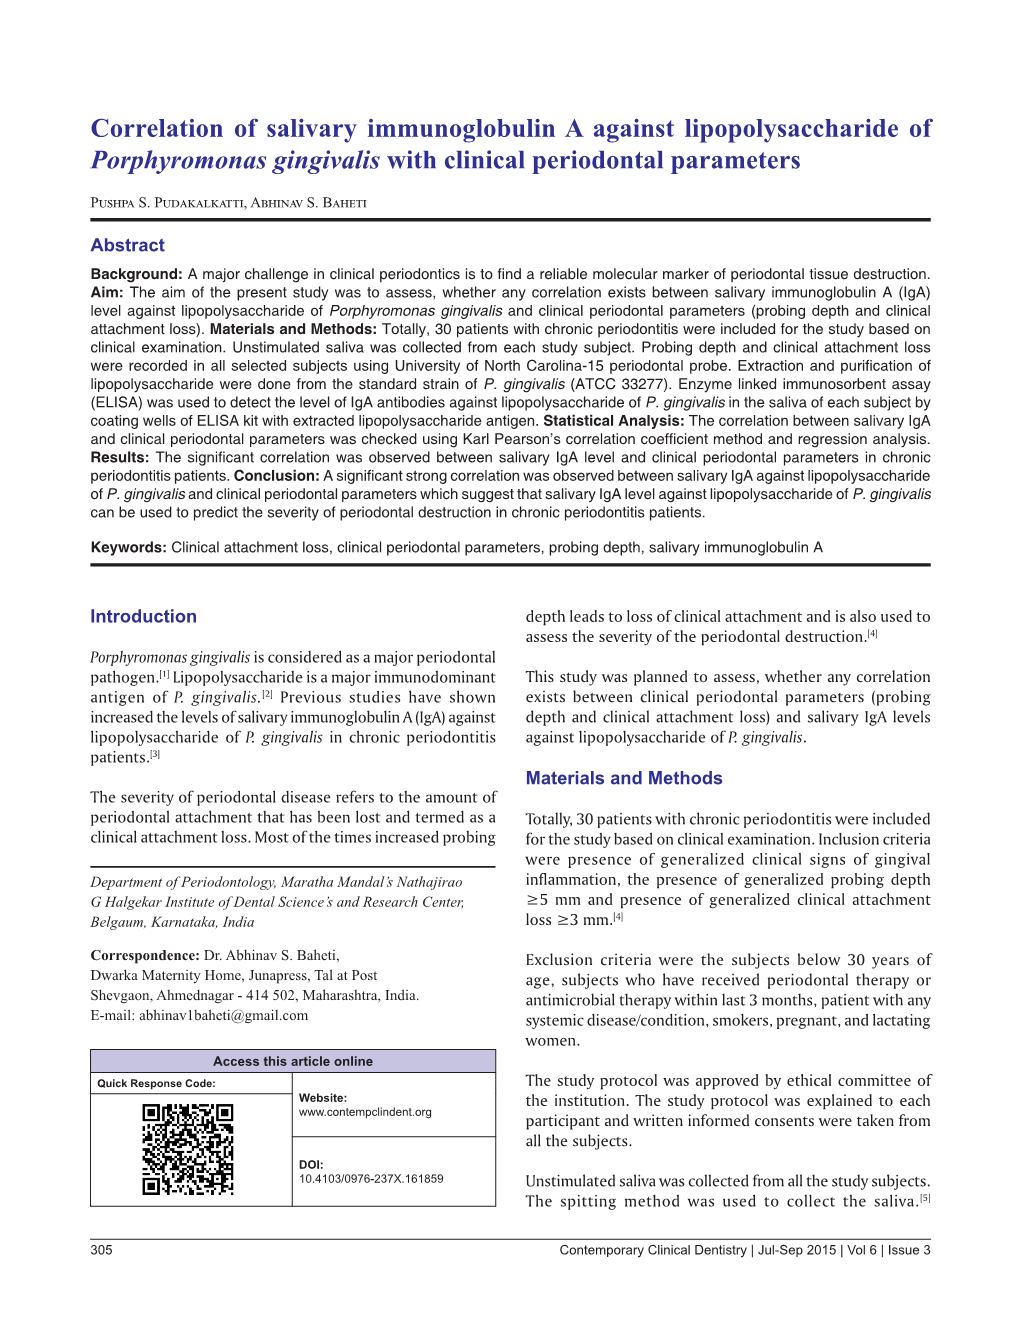 Correlation of Salivary Immunoglobulin a Against Lipopolysaccharide of Porphyromonas Gingivalis with Clinical Periodontal Parameters